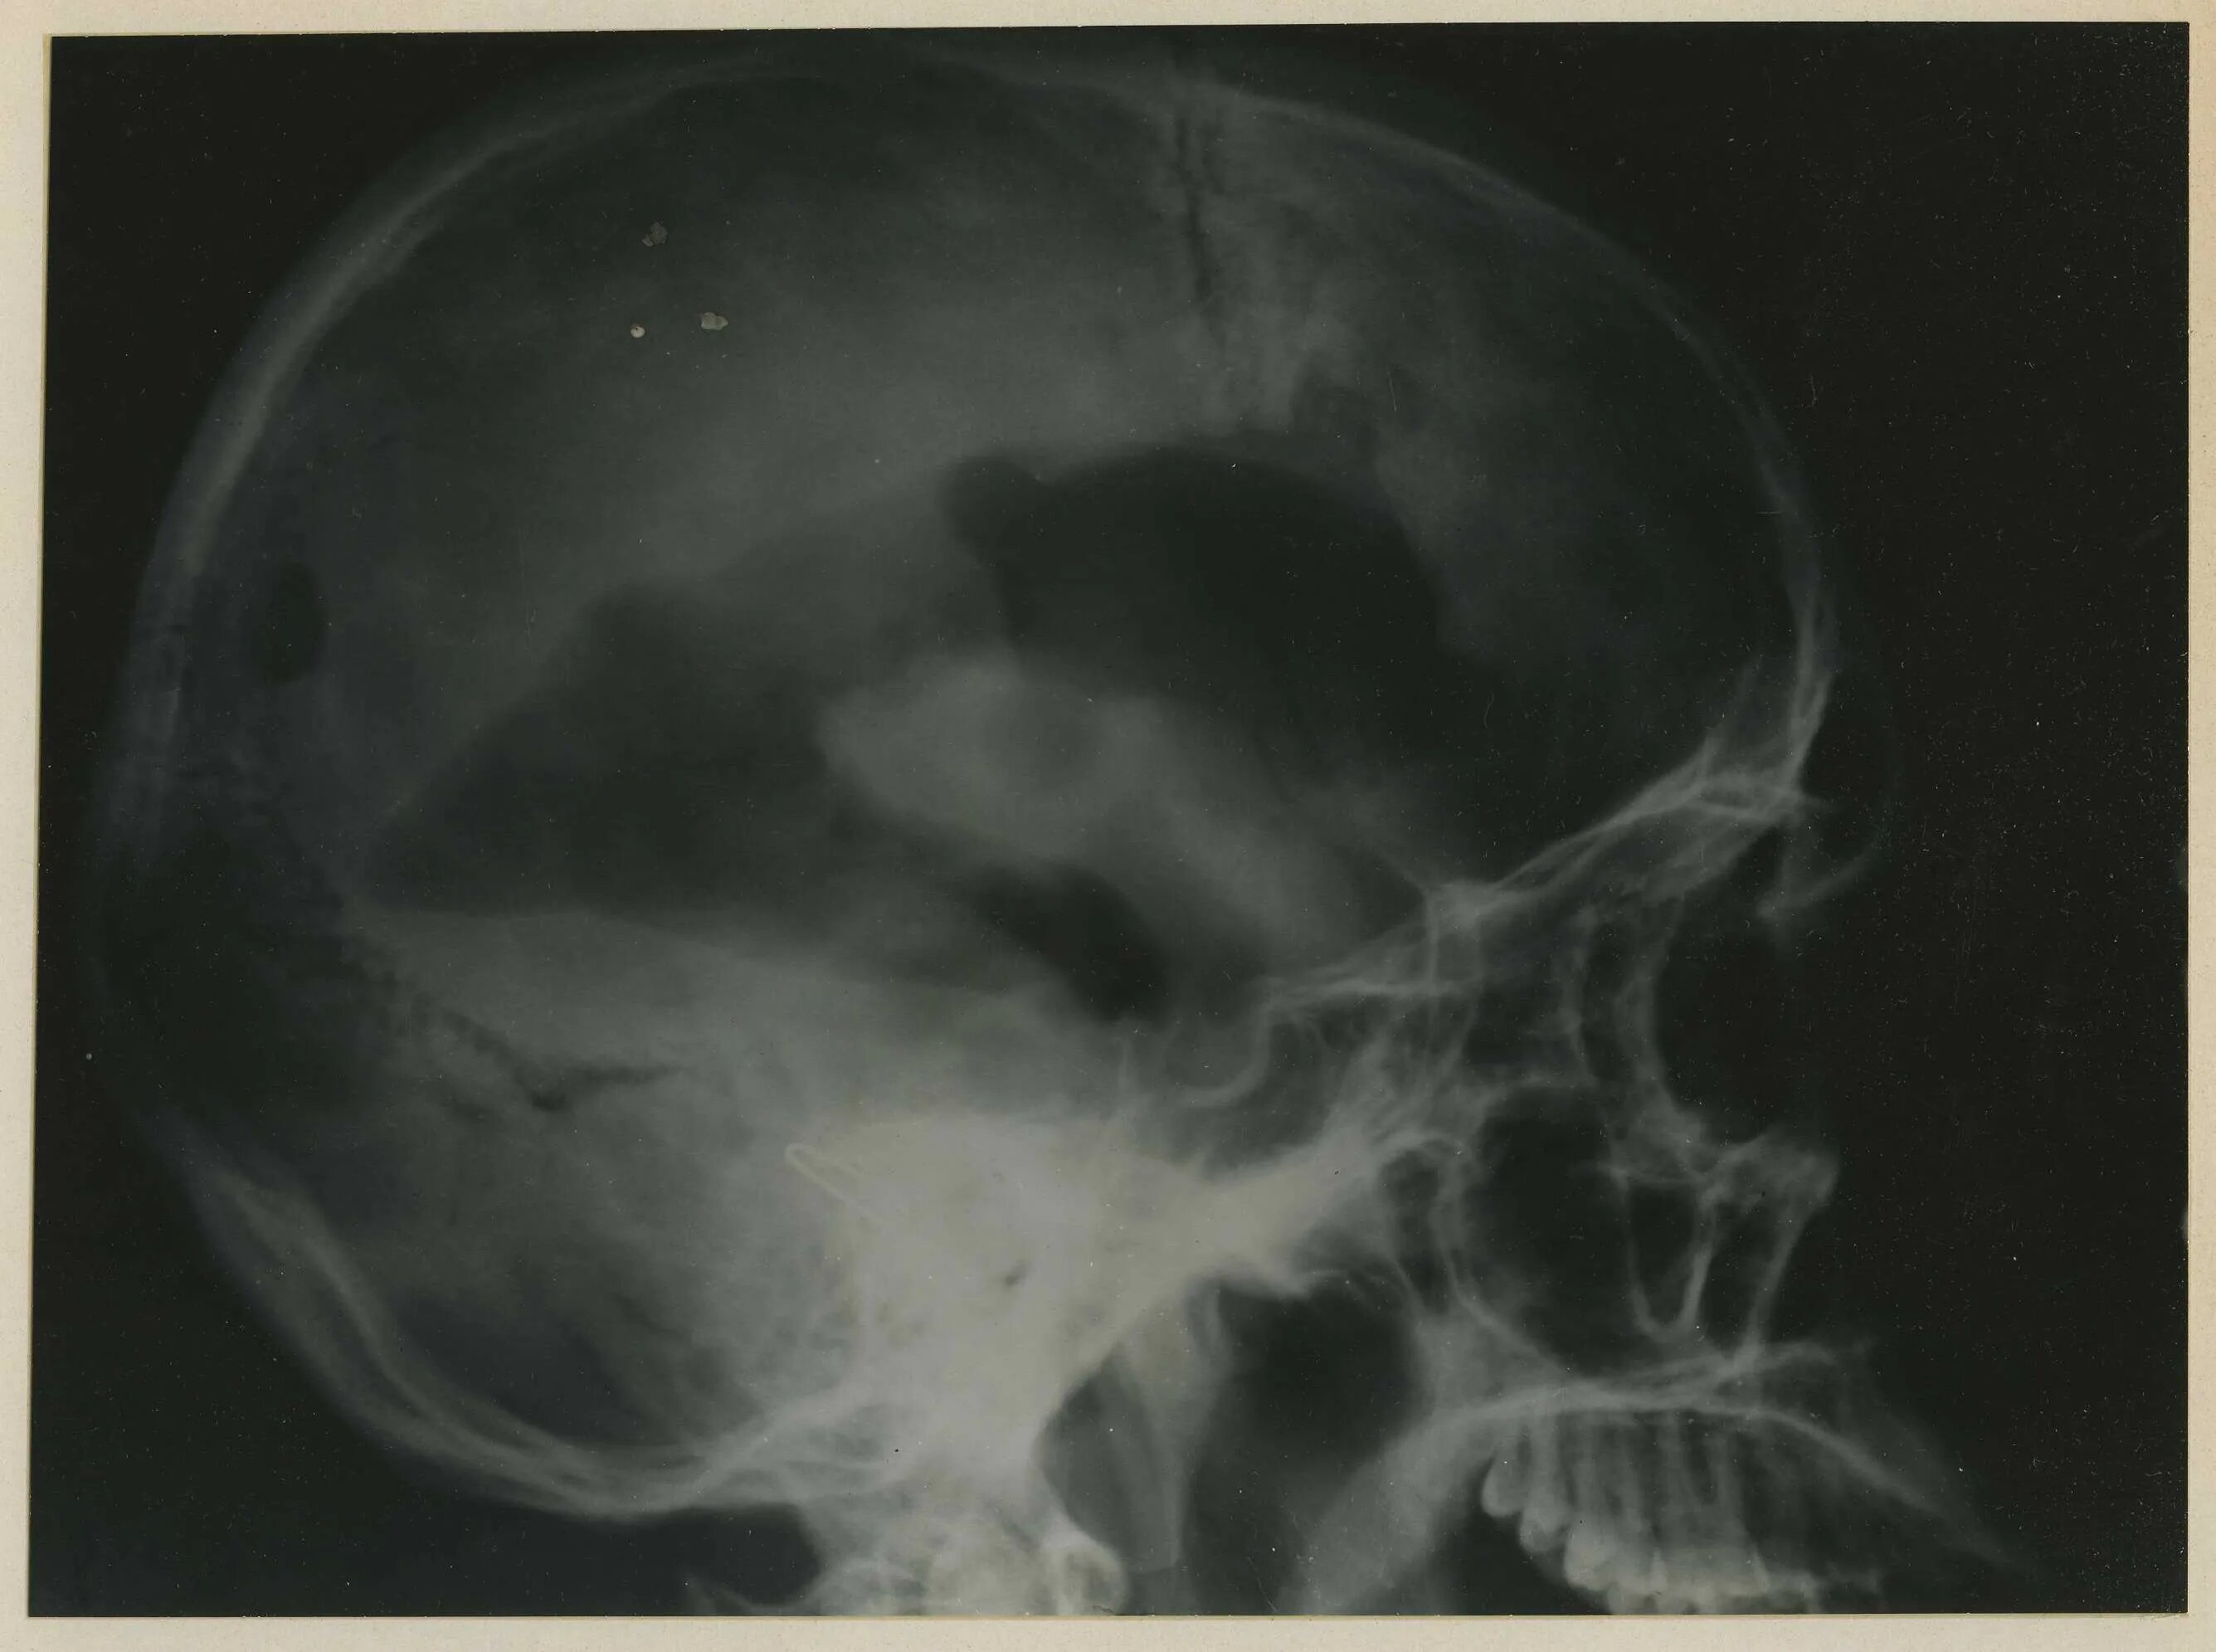 Кости черепа рентген. Перелом лобной кости рентген. Остеопороз черепа рентген. Рентгенография черепа (краниография. Трепанация черепа рентген.